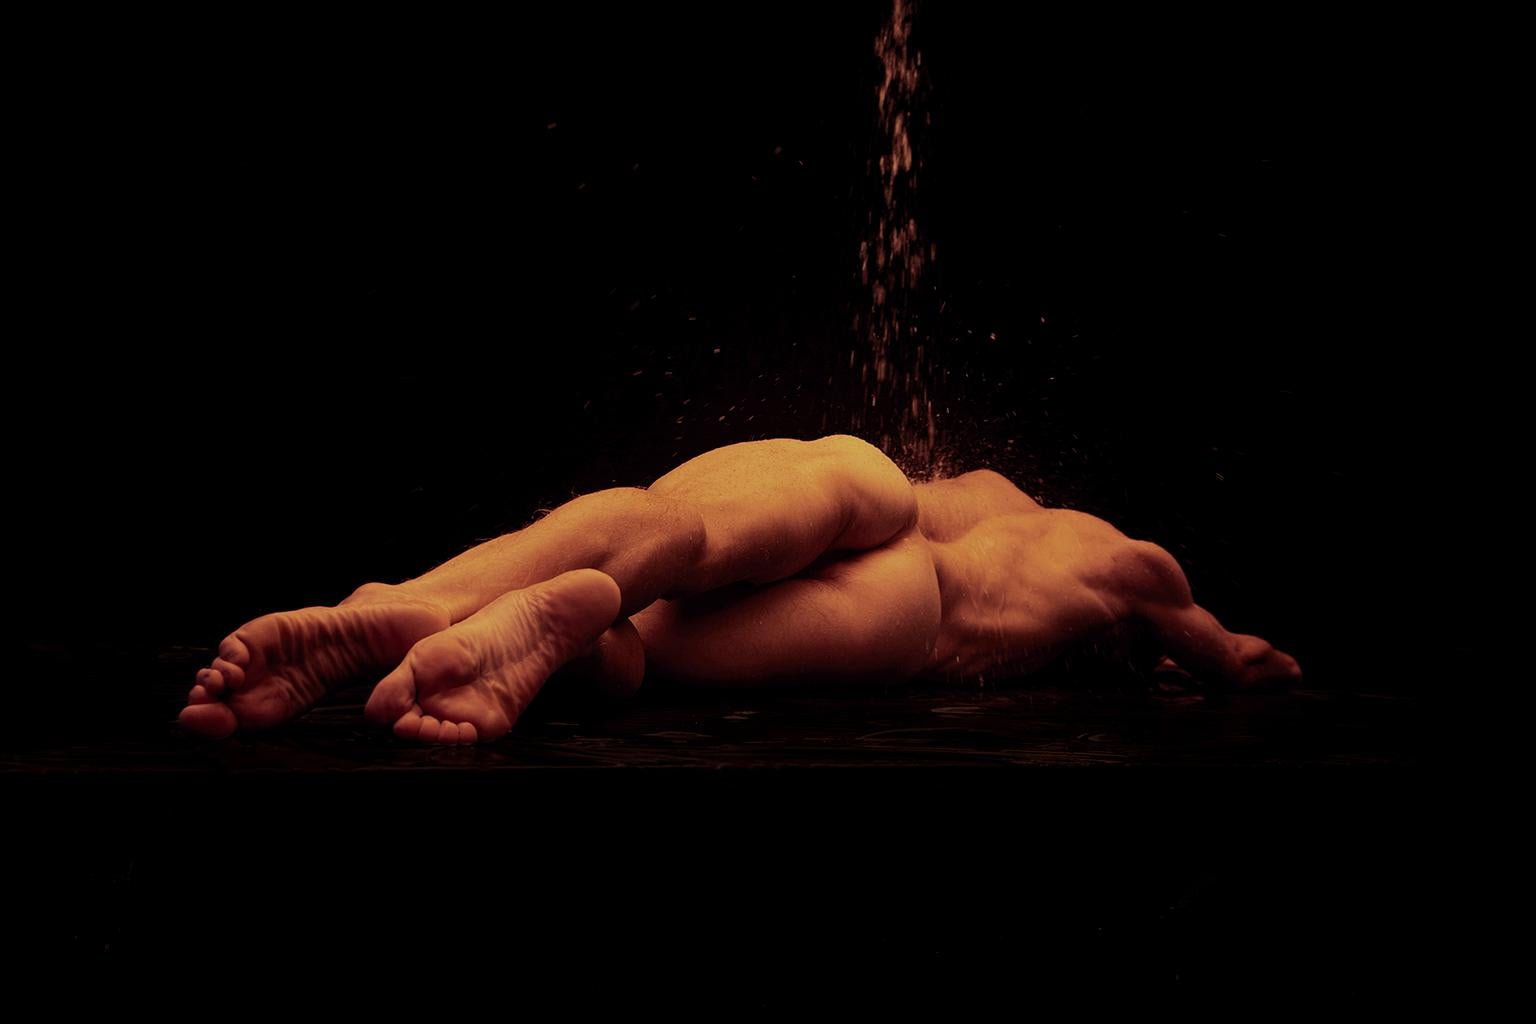 Ricky Cohete Nude Photograph – Bautizo. Momentum, Serie. Männlicher Akt Limitierte Auflage Farbfotografie